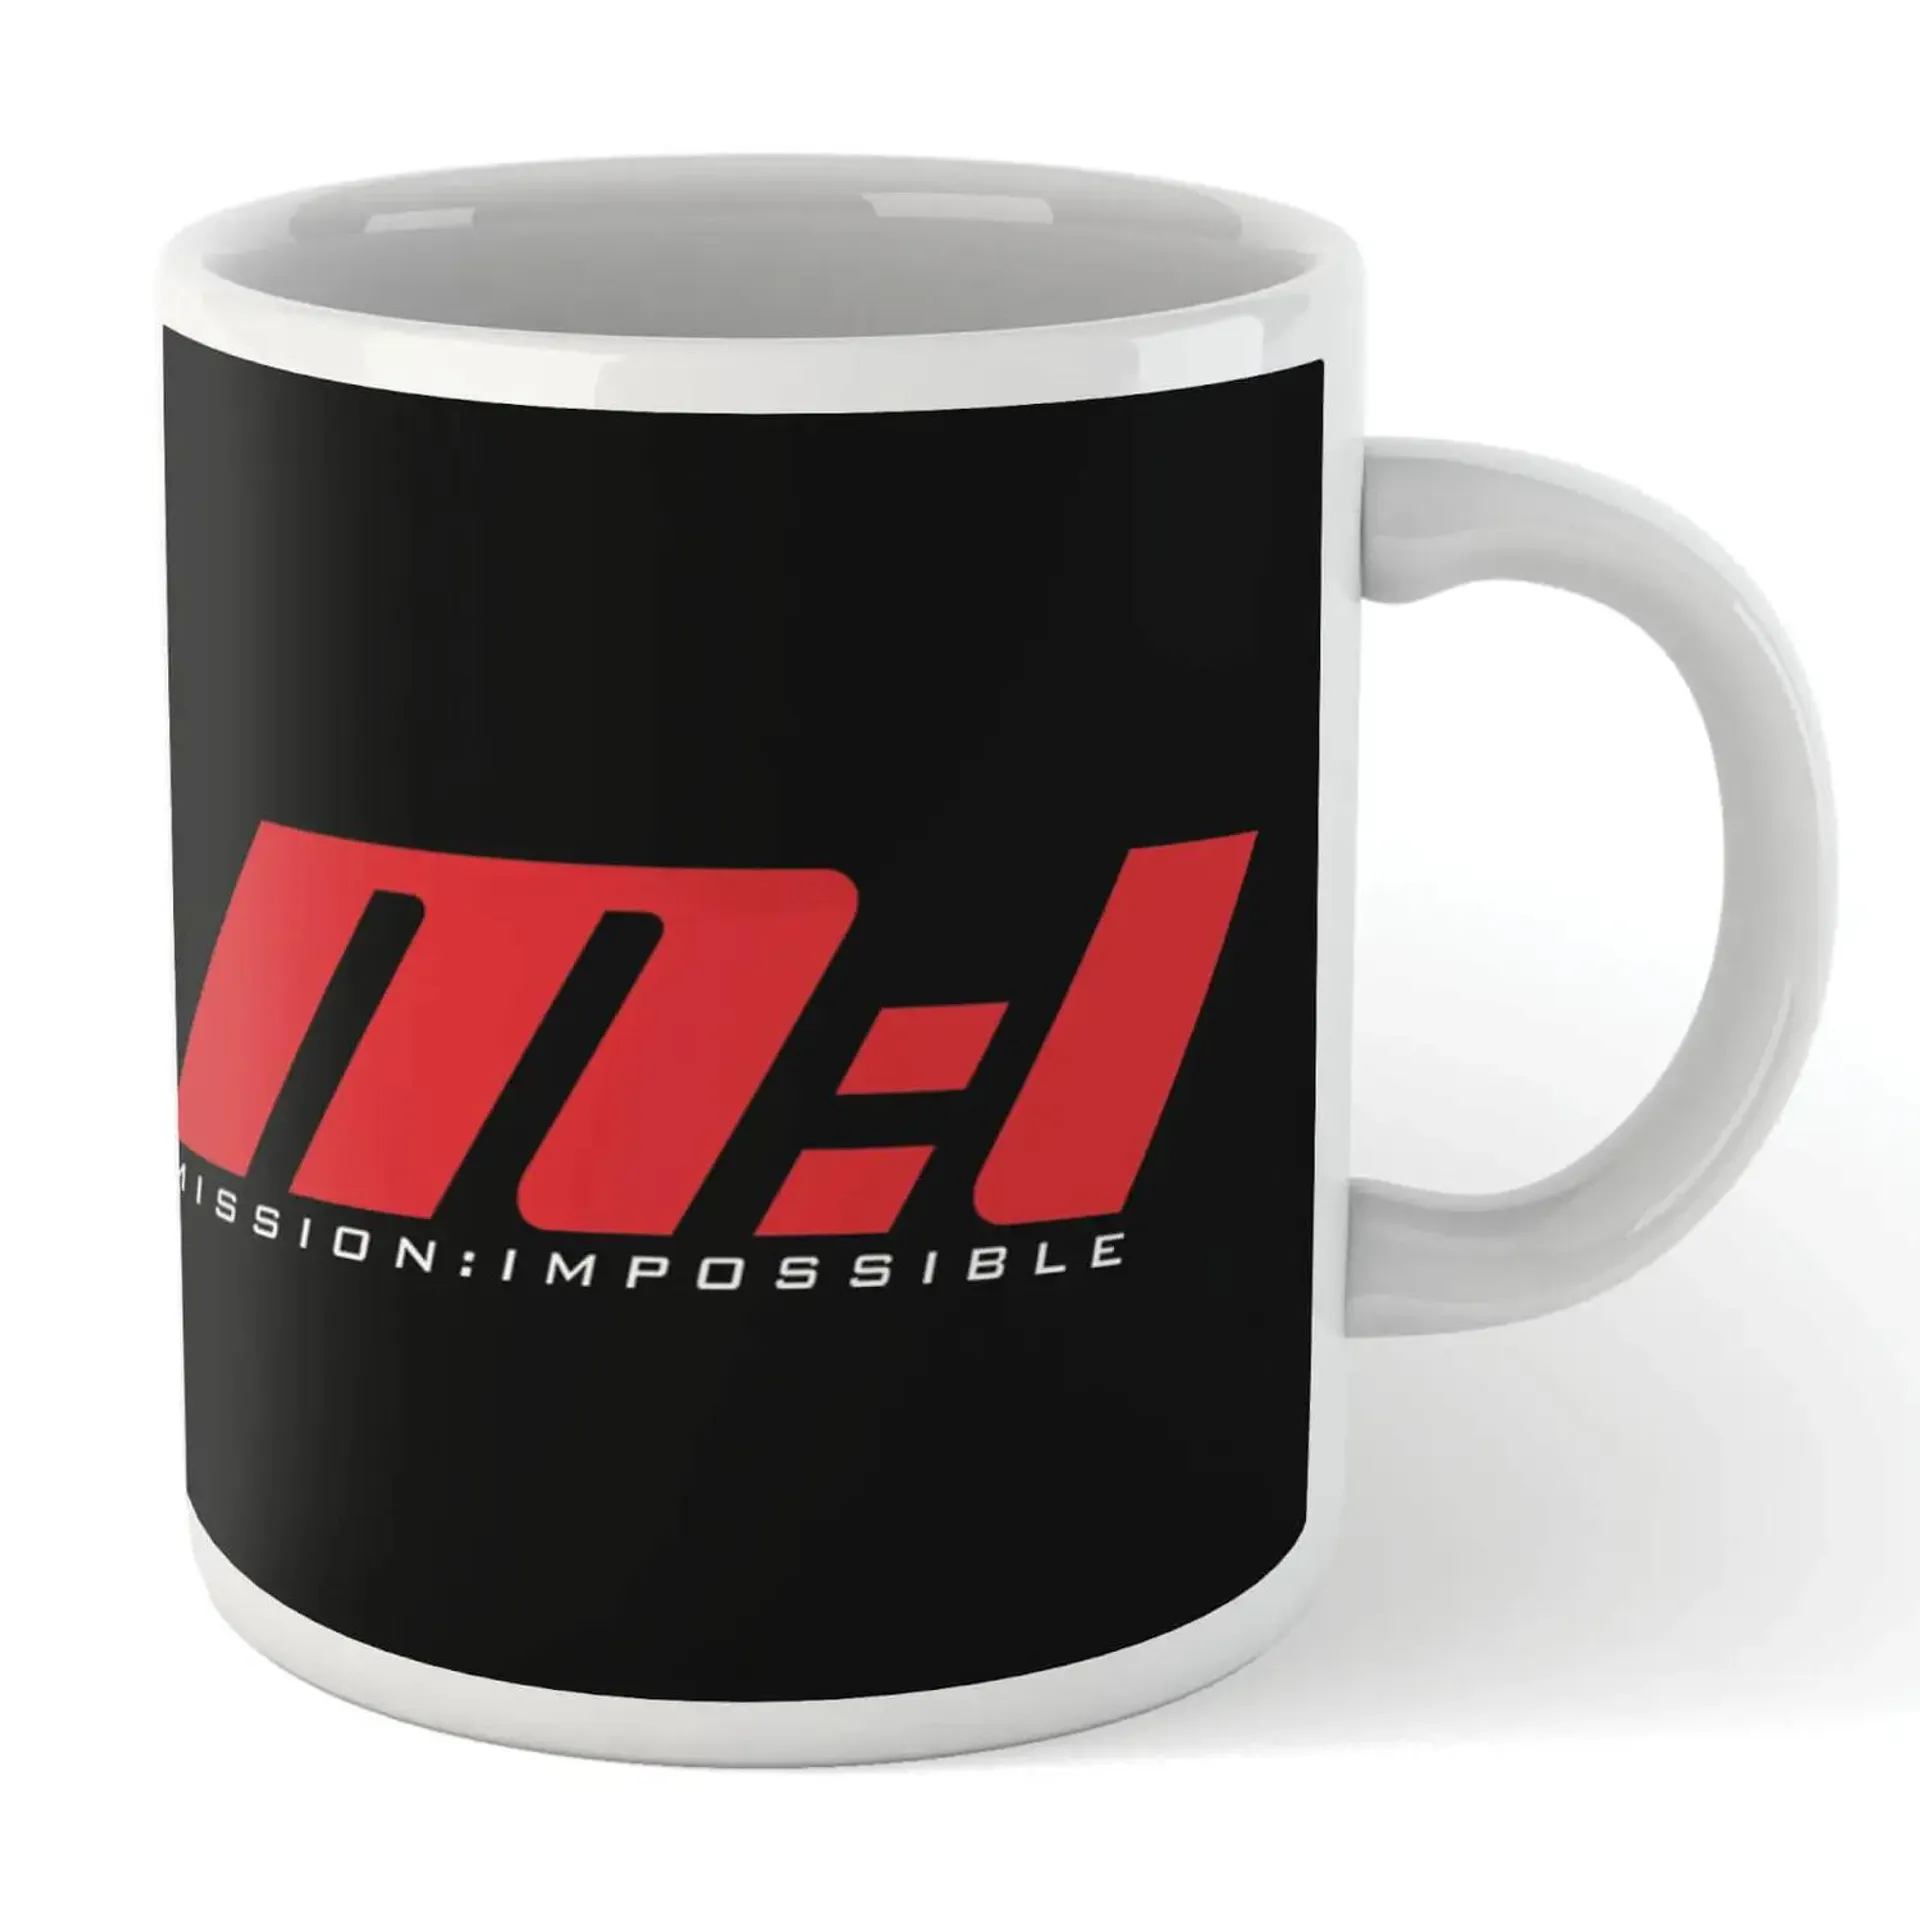 Mission Impossible Force Mug